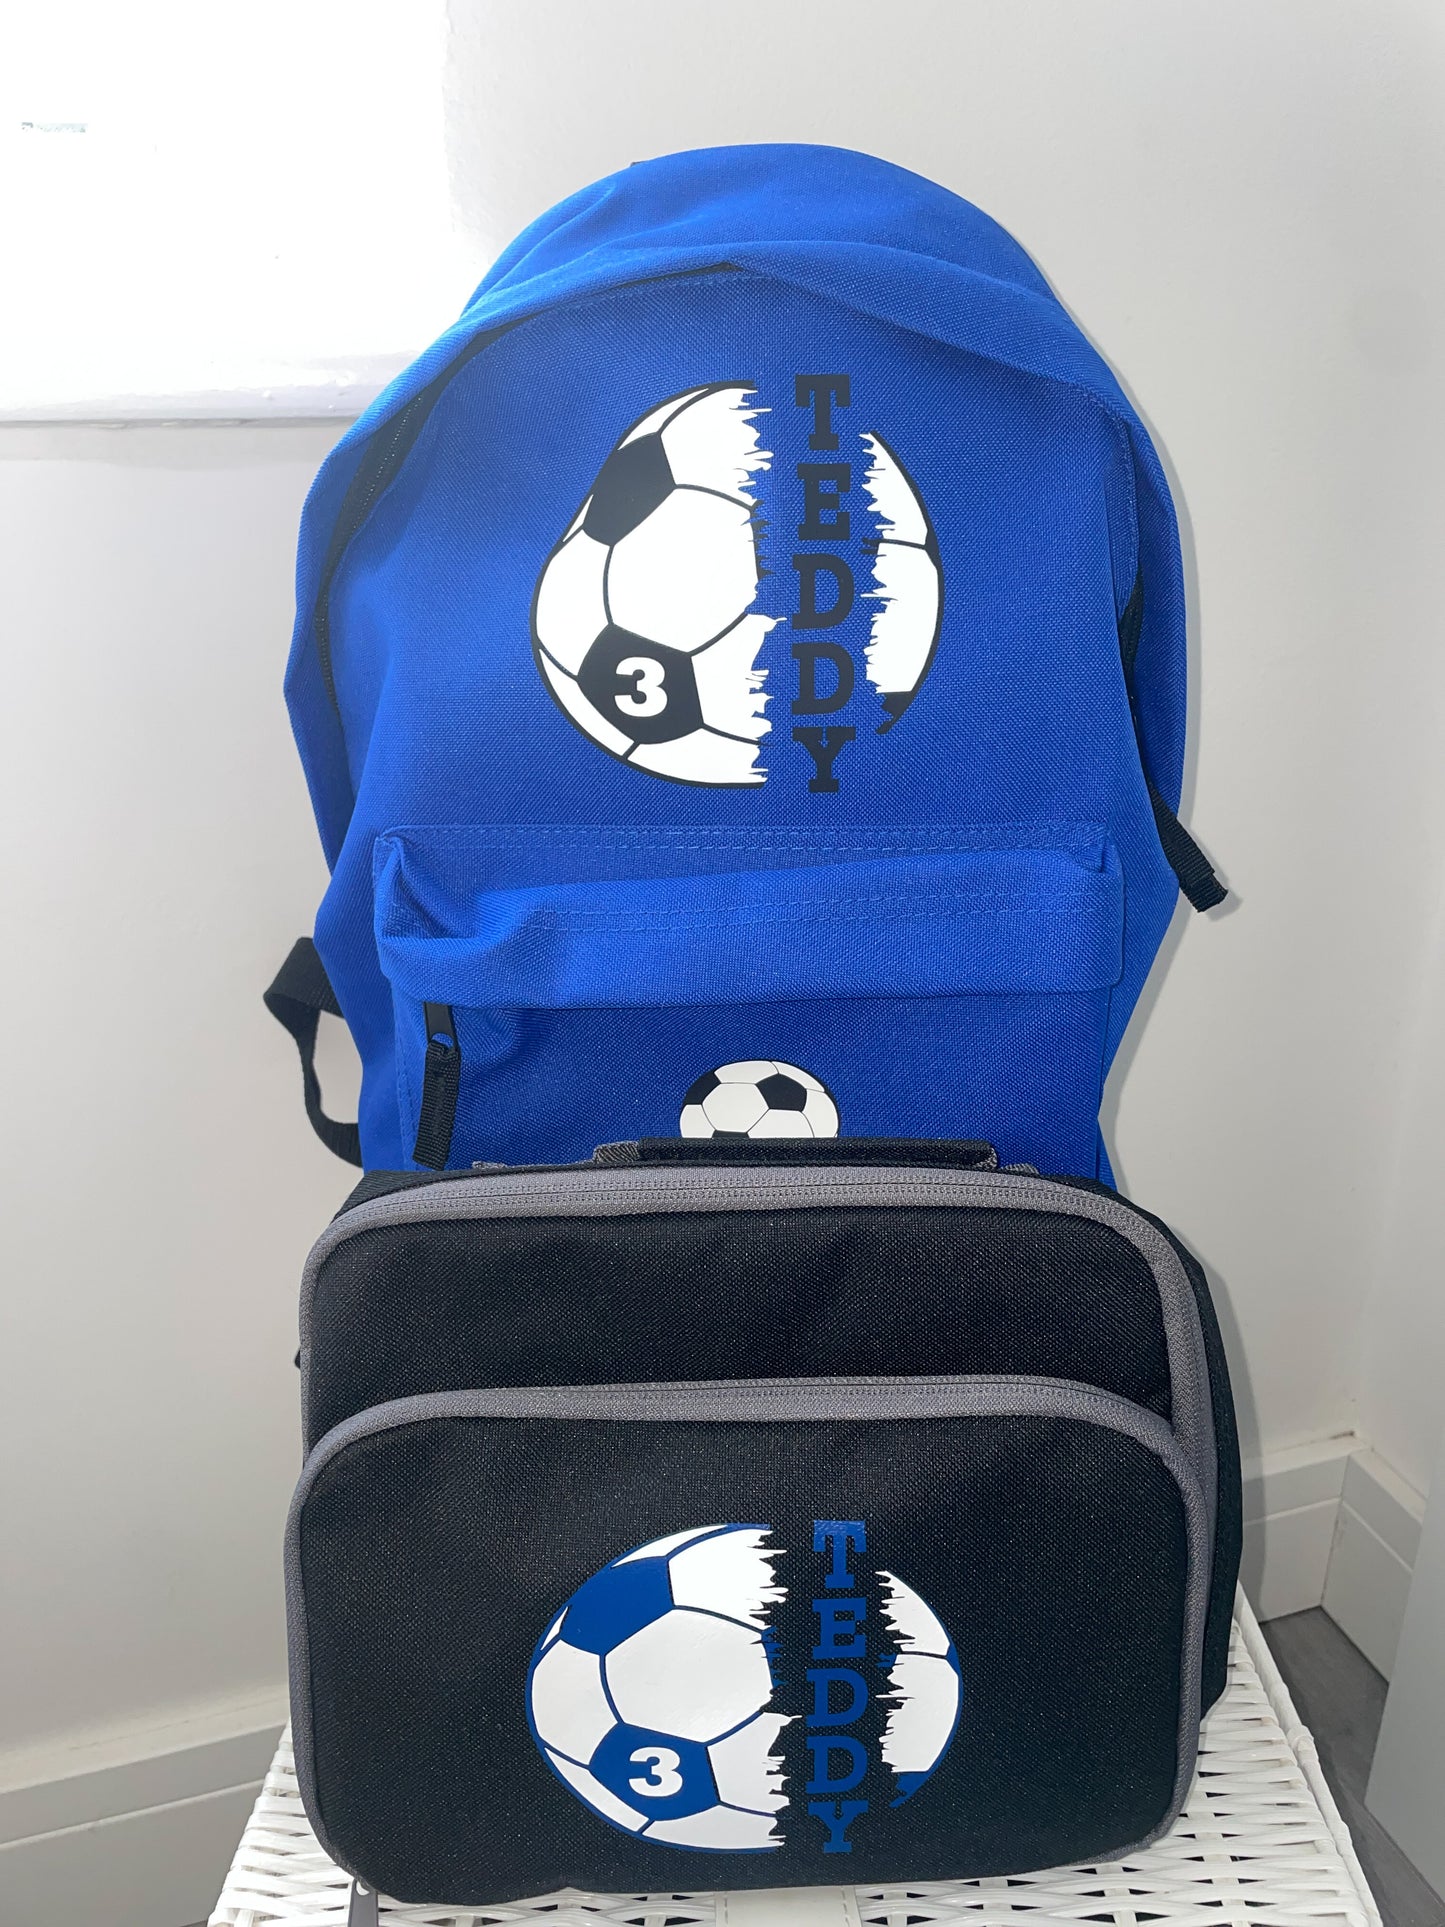 Personalised Character School Bag Set - Backpack & Lunch Bag